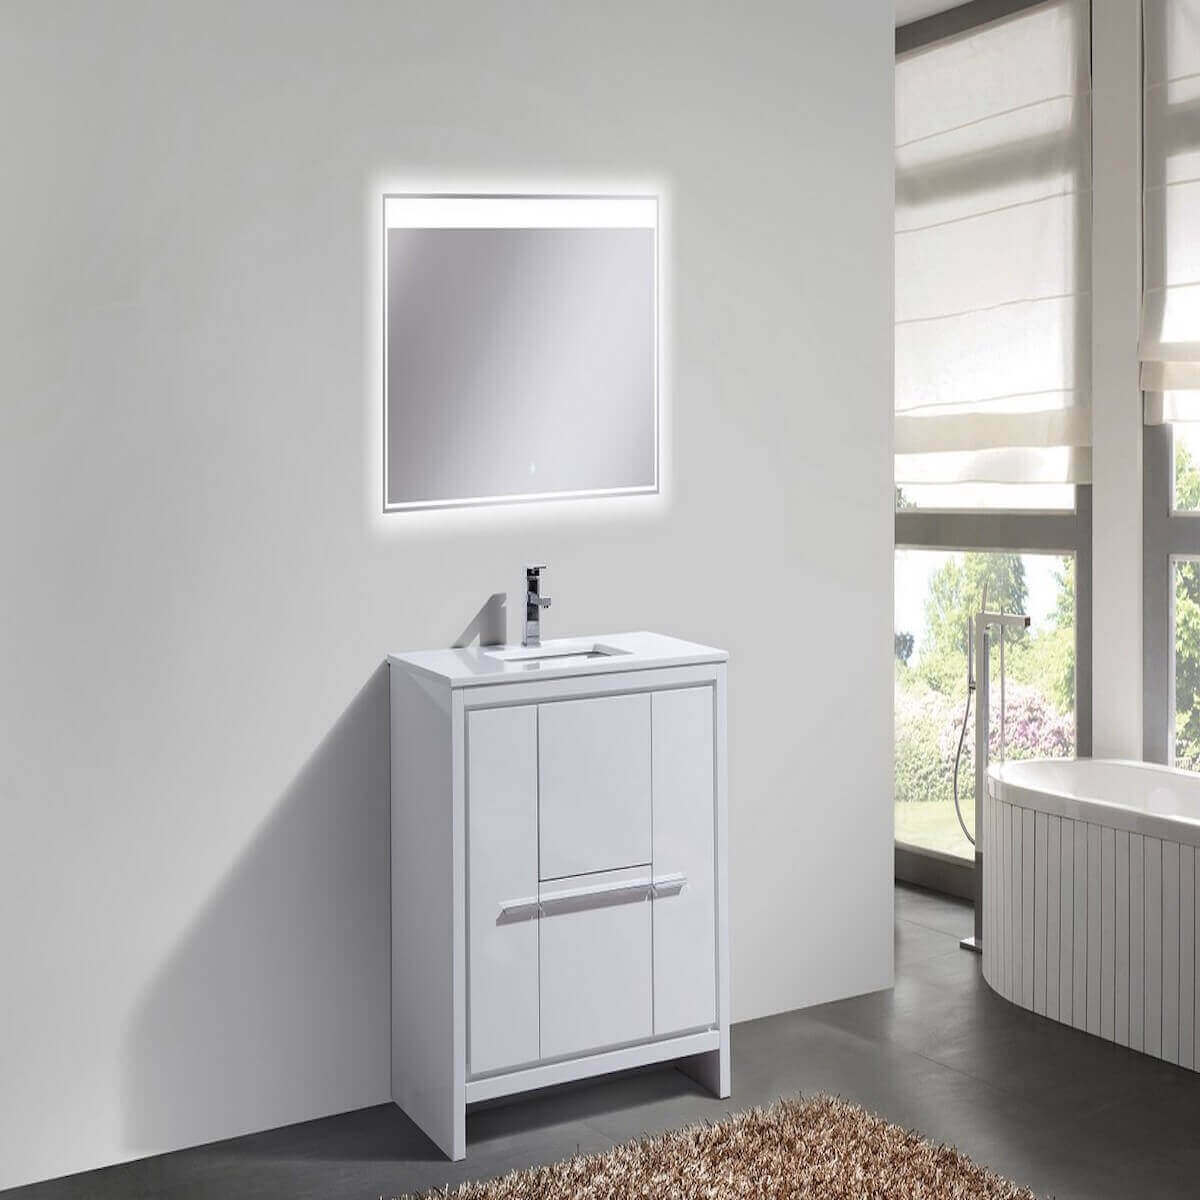 KubeBath Dolce 36" Gloss White Freestanding Single Vanity with Quartz Countertop AD636GW in Bathroom #finish_high gloss white